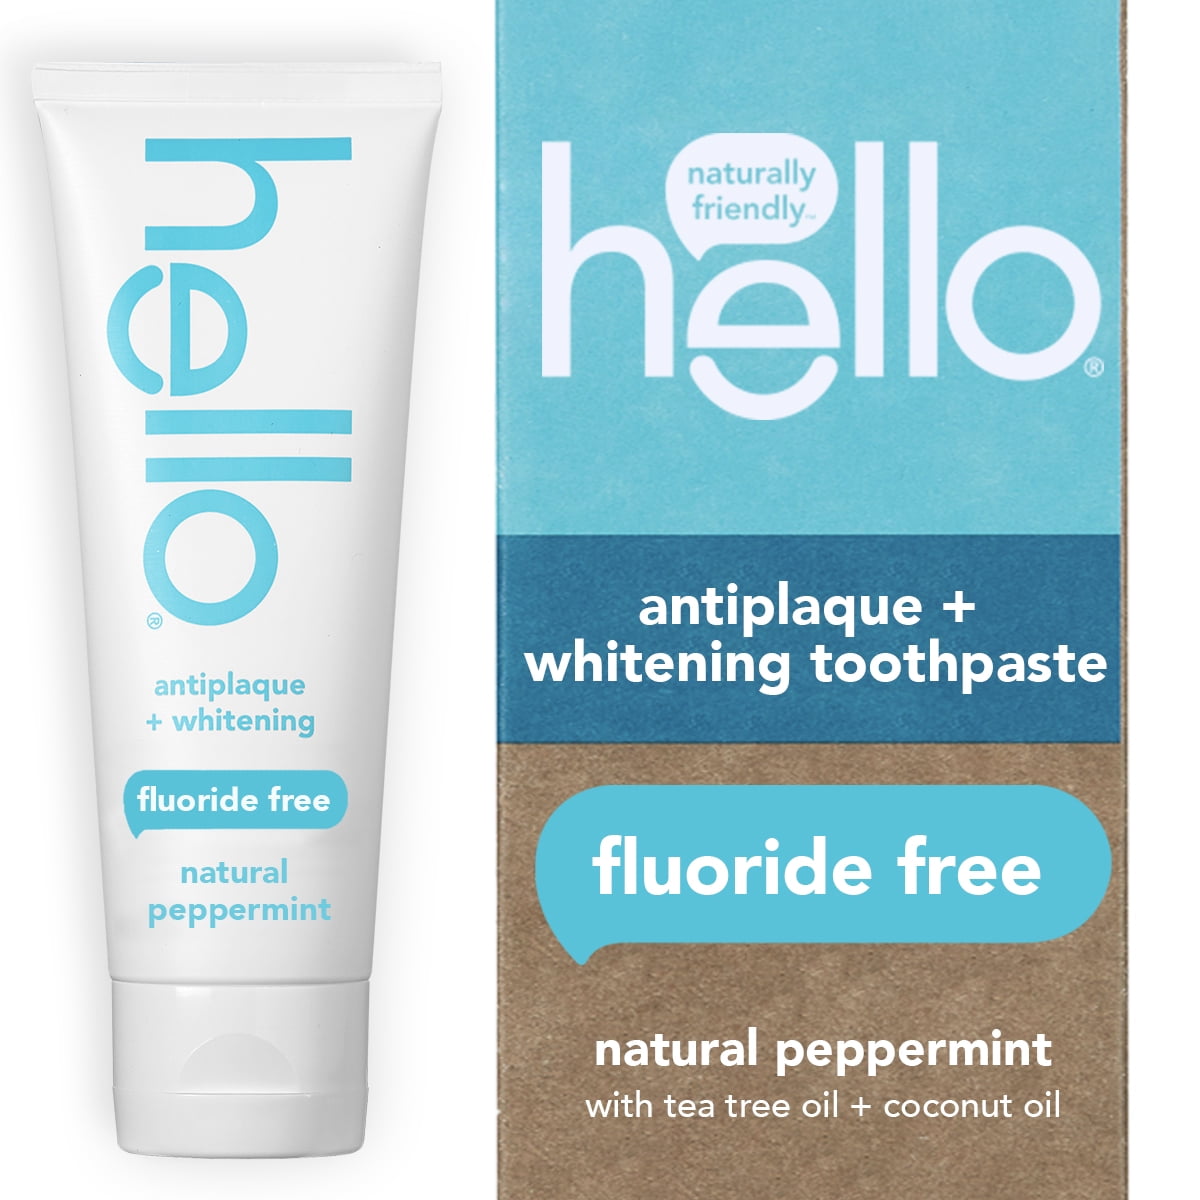 Hello Antiplaque + Whitening Toothpaste, Natural Peppermint, Tea Tree + Coconut Oil, 4.7oz